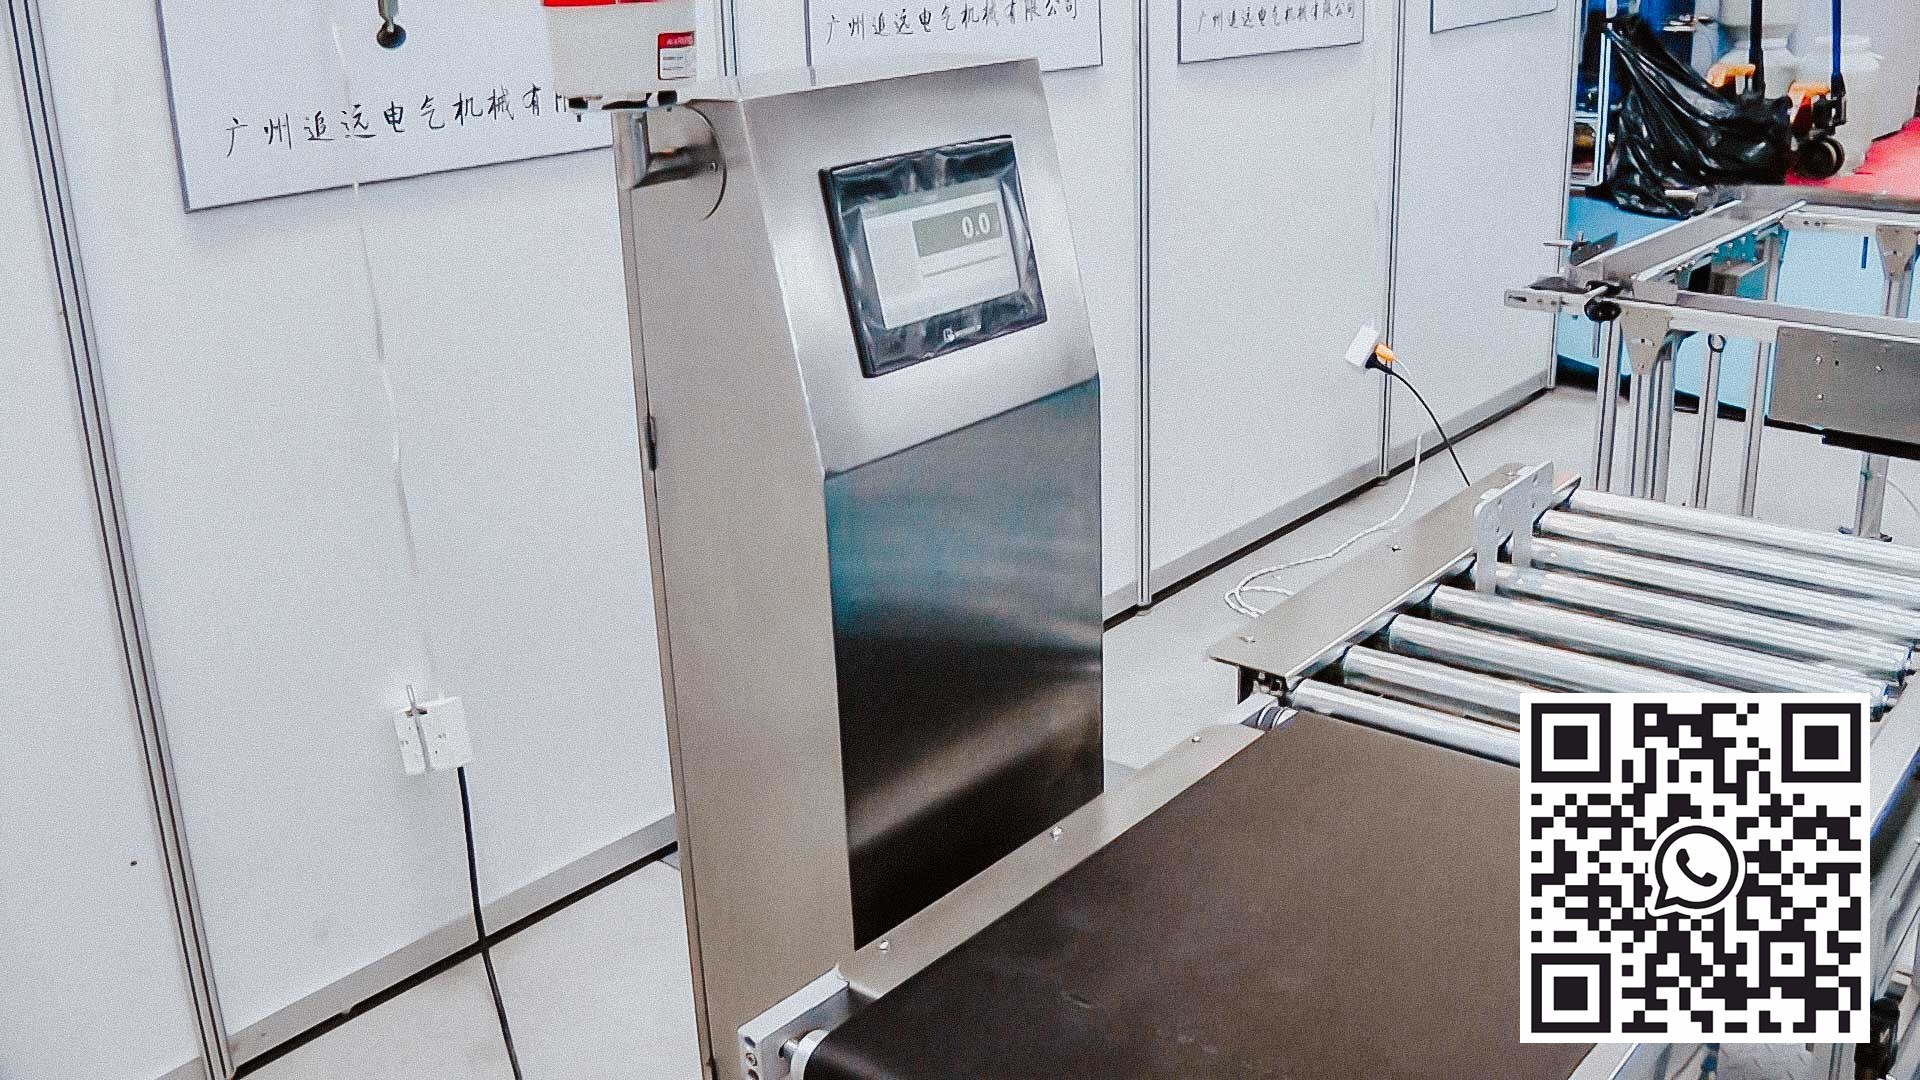 Báscula transportadora automática para control de dosis de productos farmacéuticos de alto peso